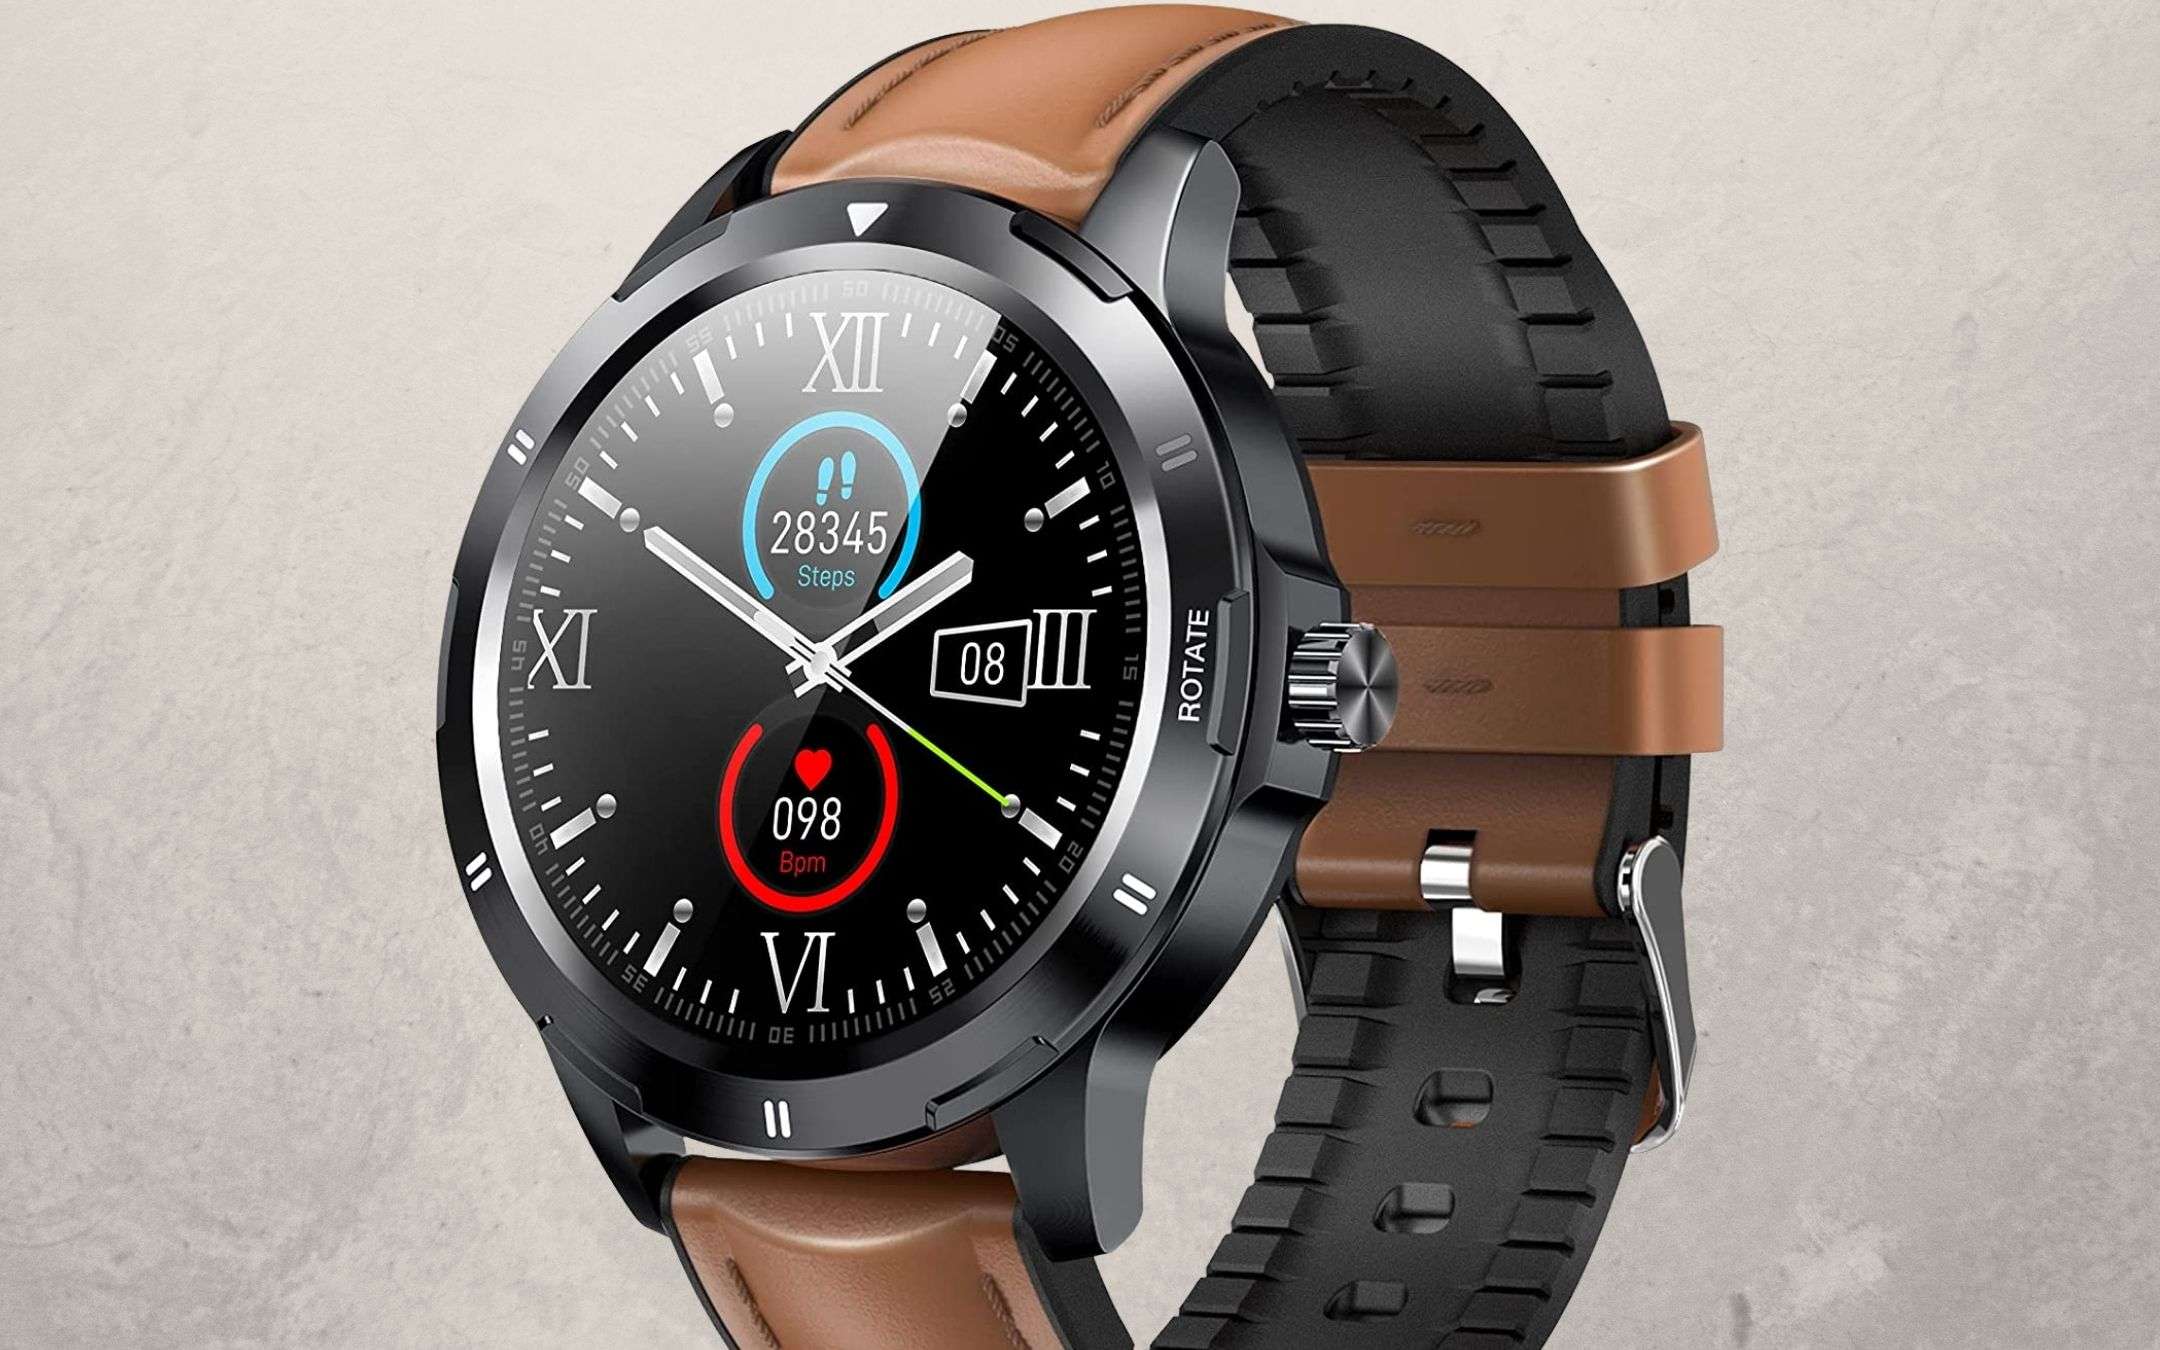 L'eleganza di questo smartwatch a 35€ è IMPRESSIONANTE